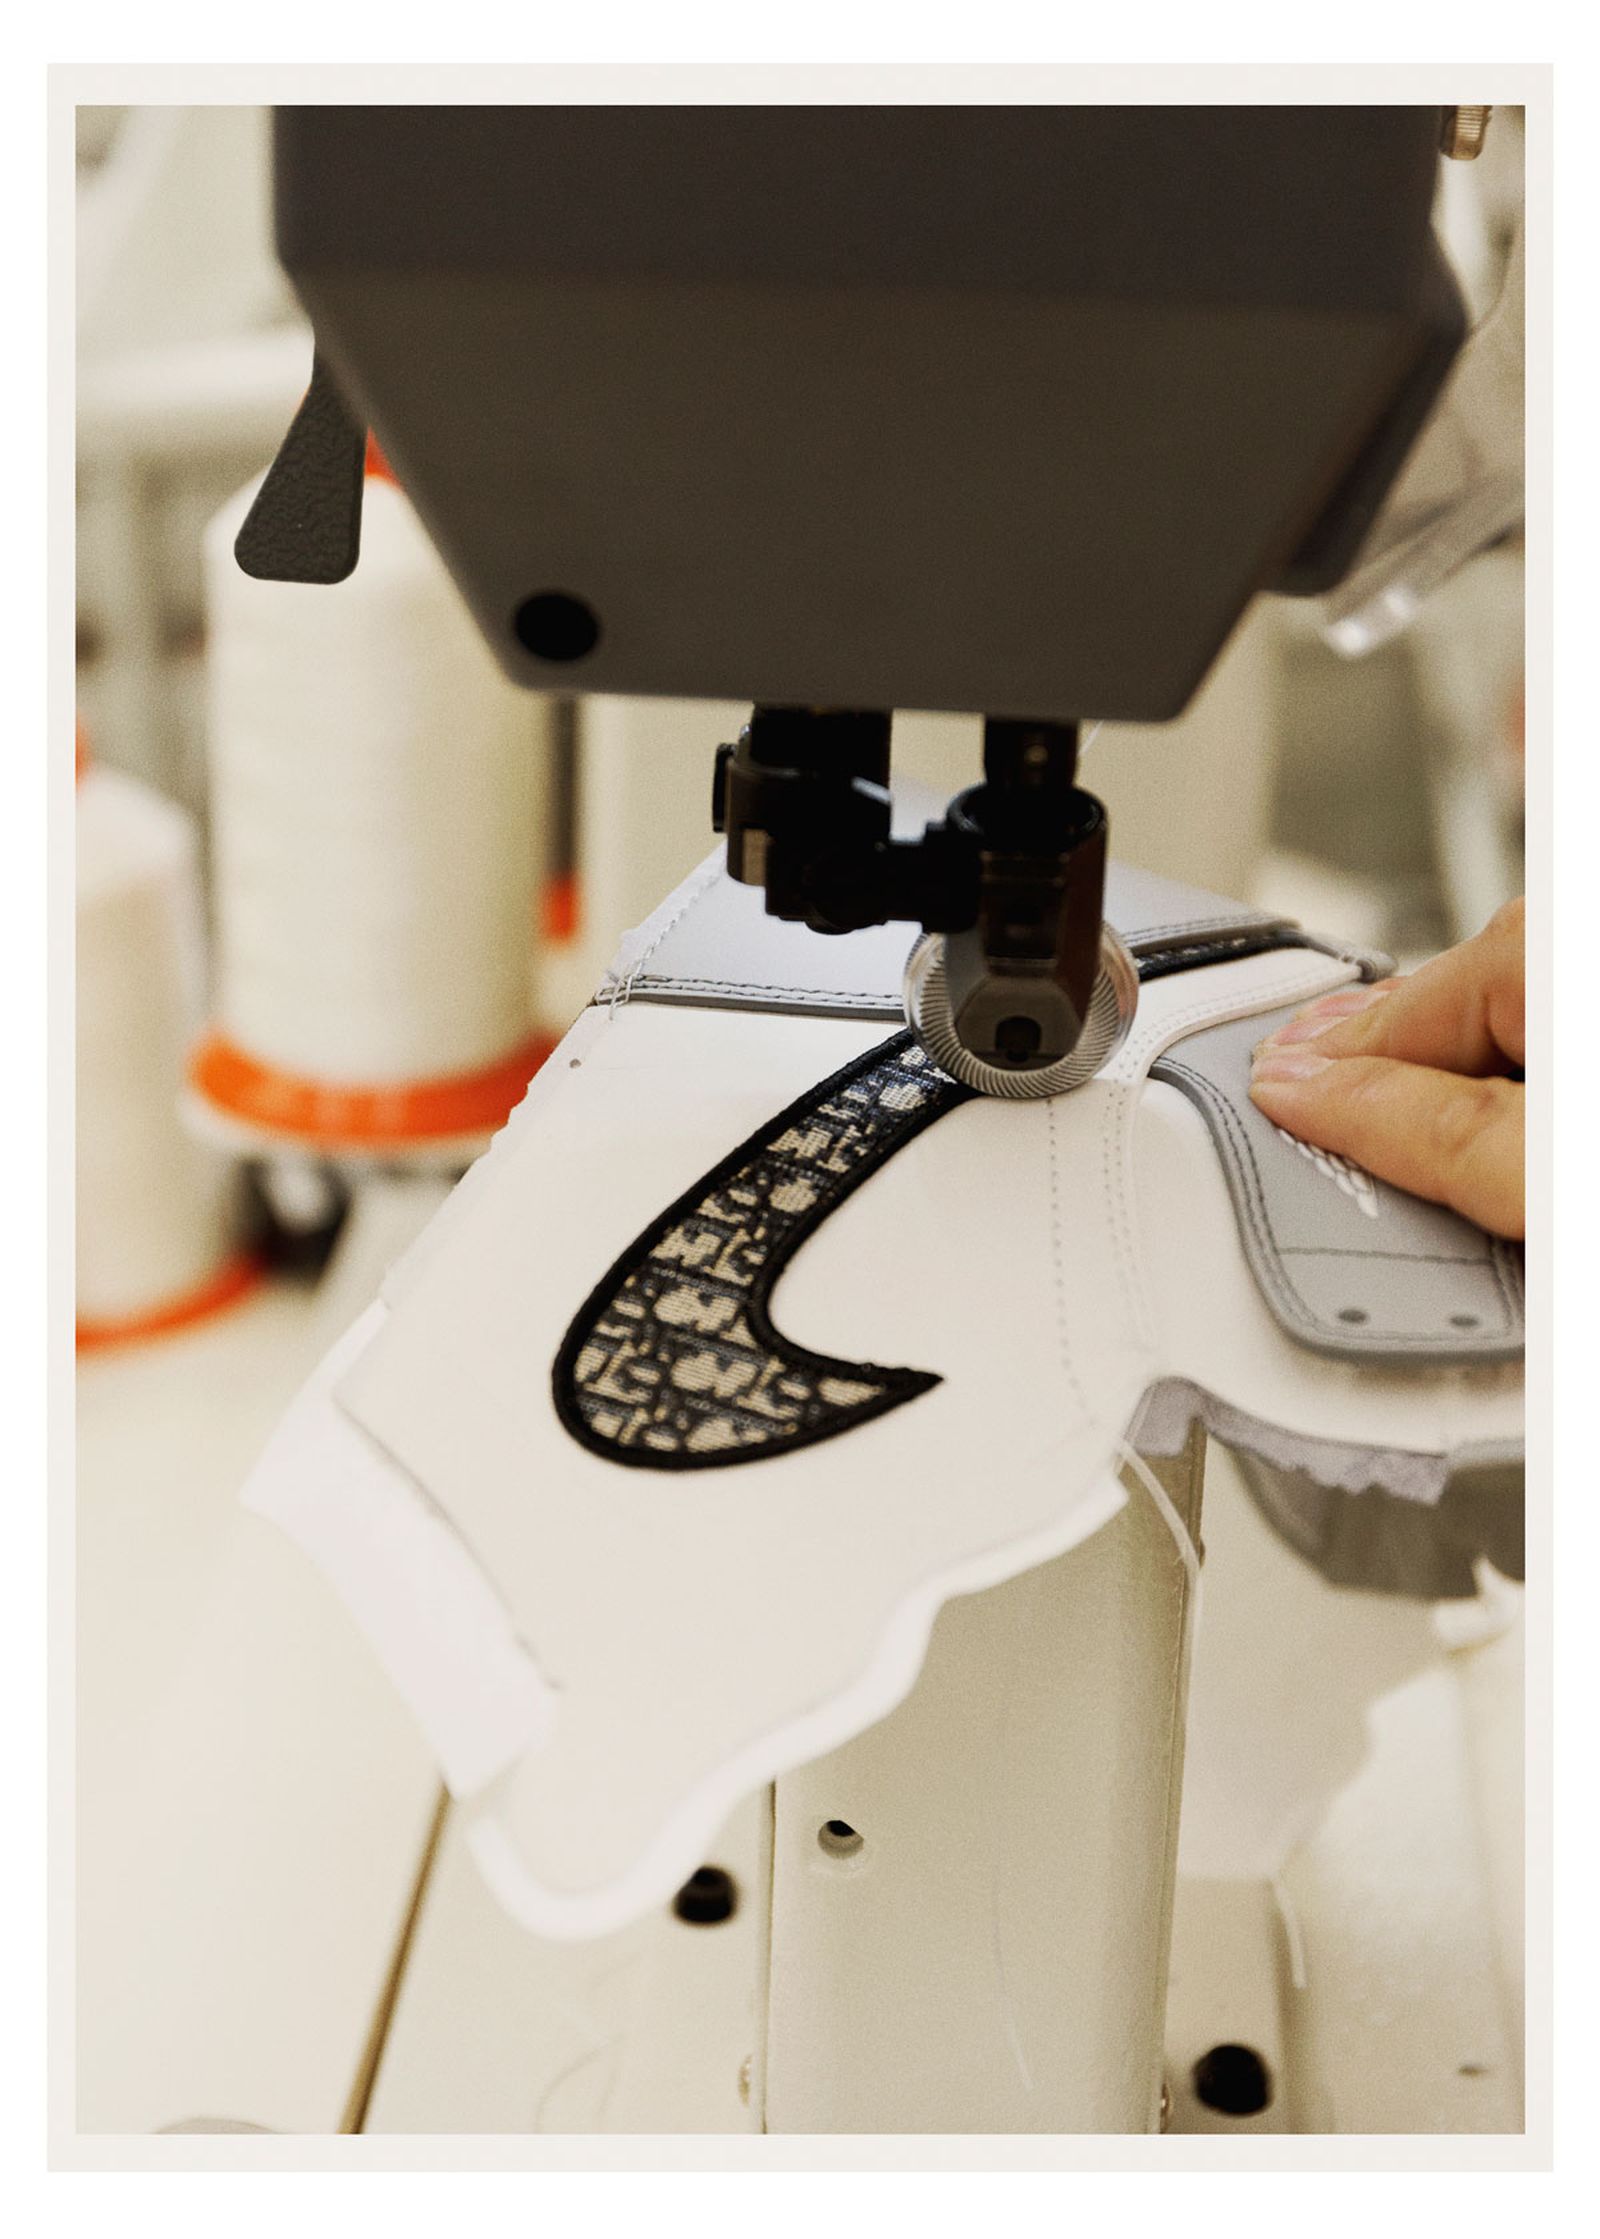 A look at the production process behind the Dior x Nike Air Jordan 1